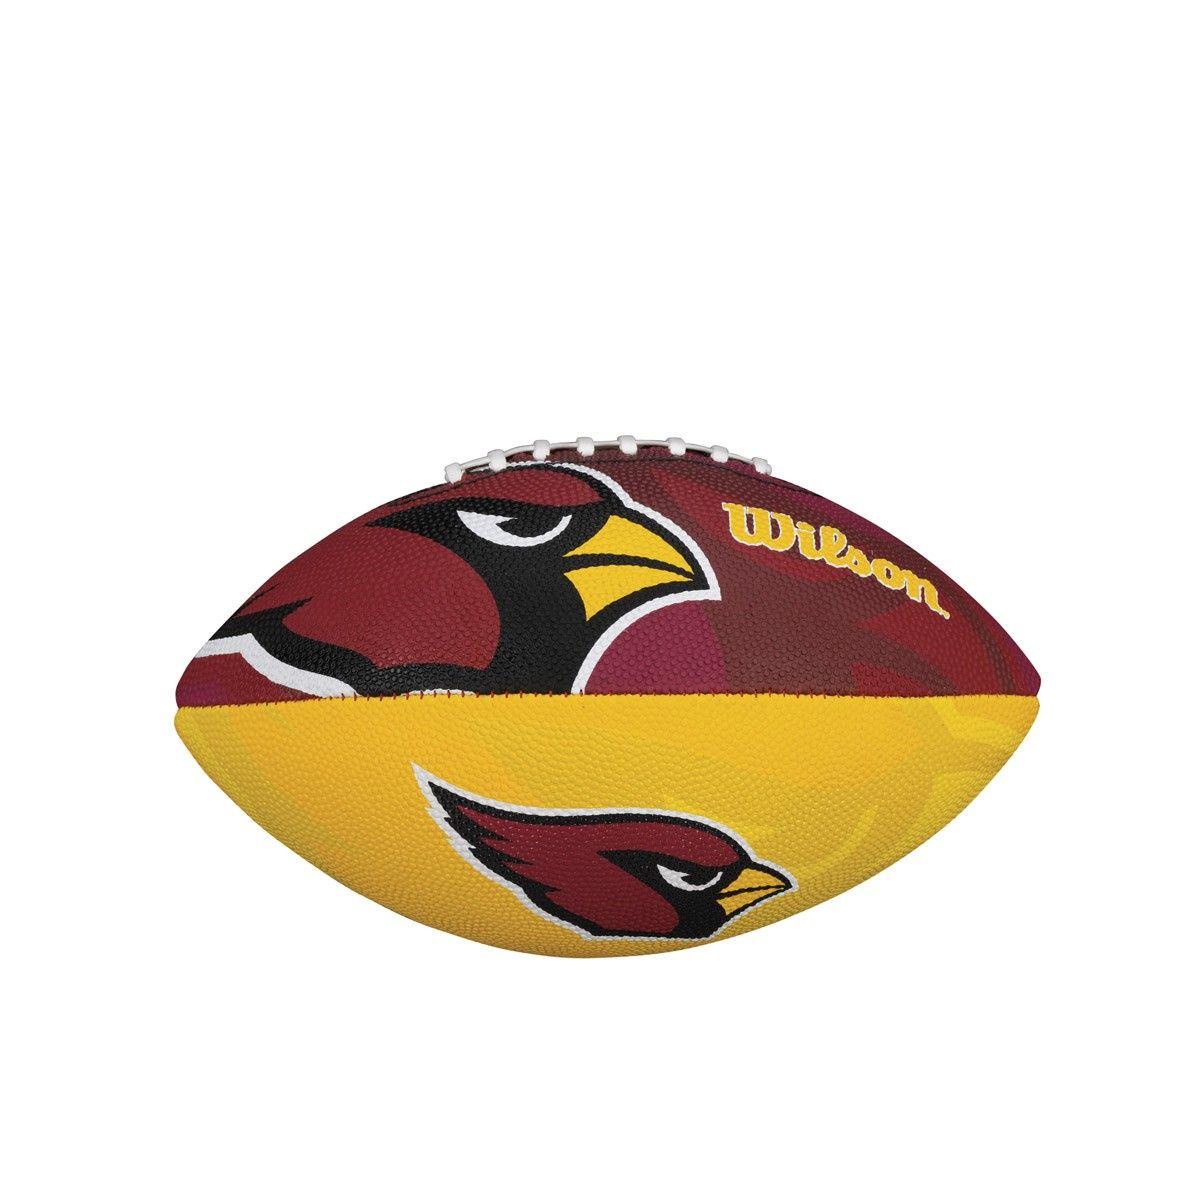 Cardinals Football Logo - NFL TEAM LOGO JUNIOR SIZE FOOTBALL - ARIZONA CARDINALS | Wilson ...